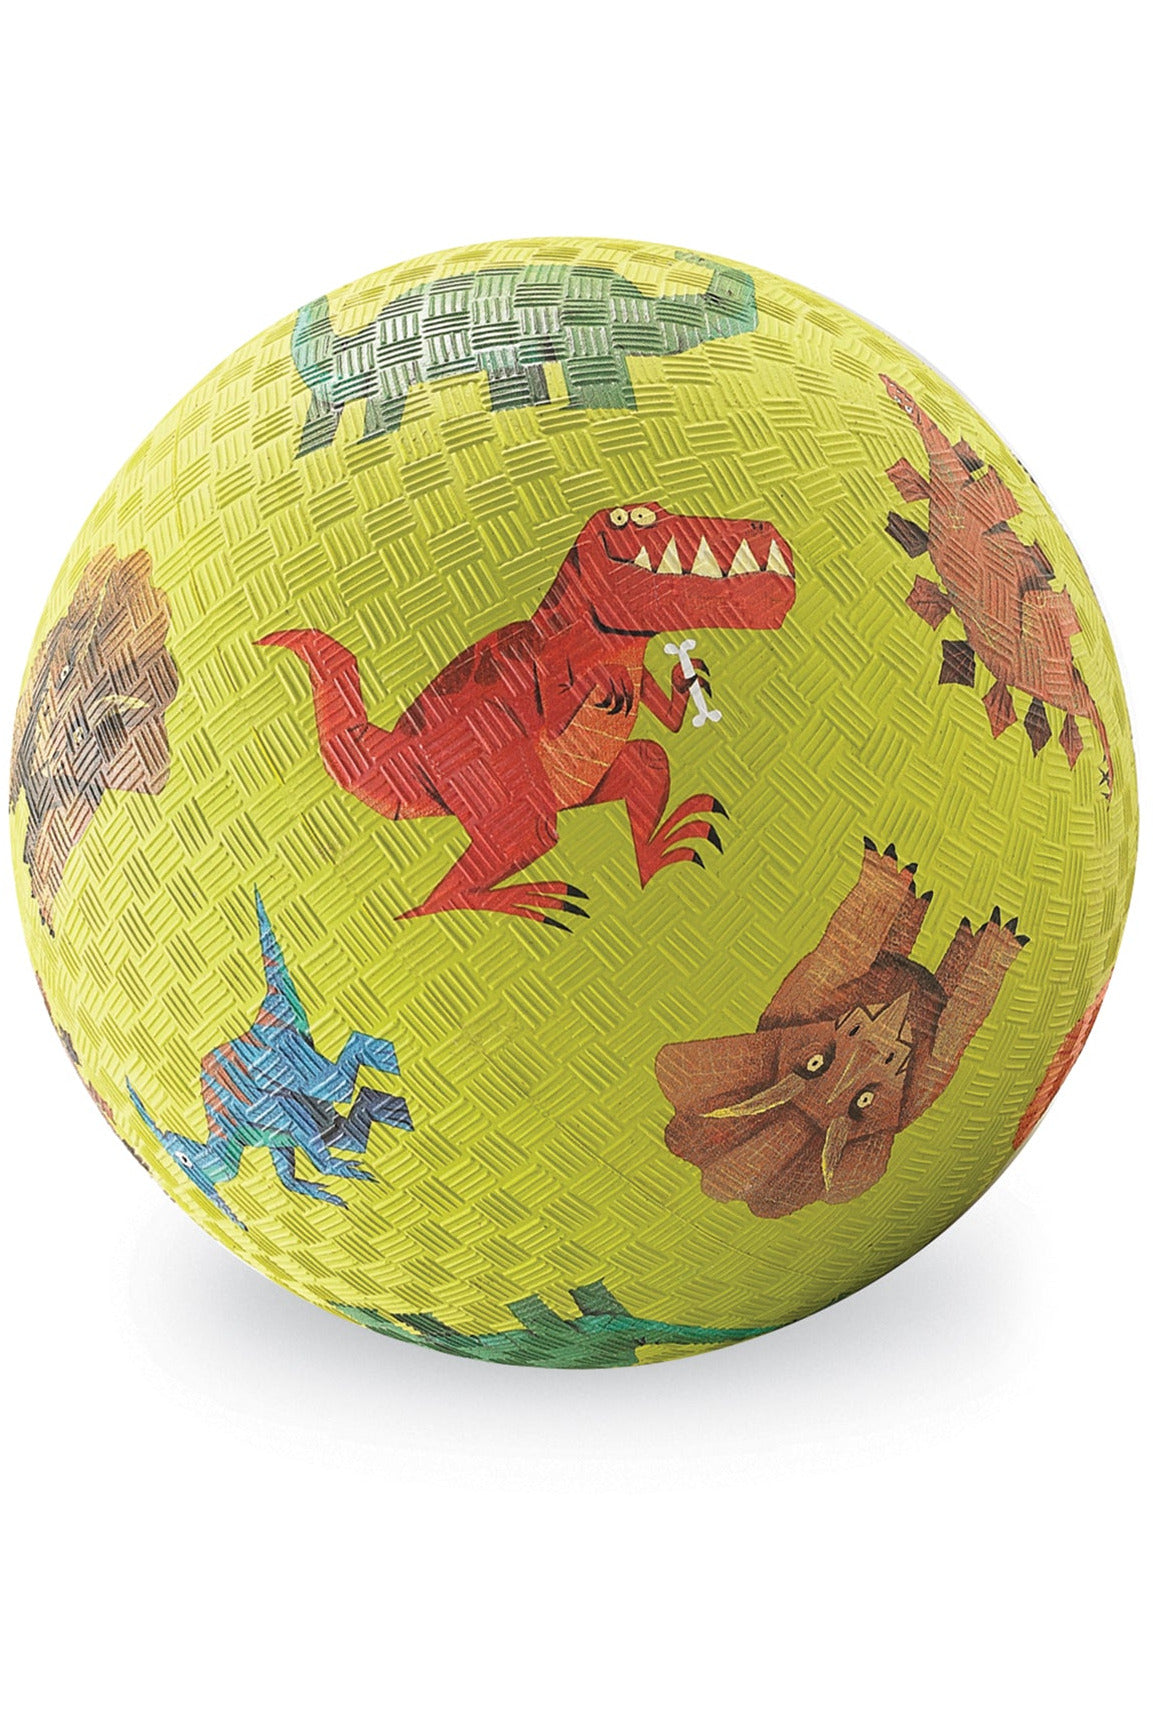 Playground Ball 5 Inch - Dinosaurs Green